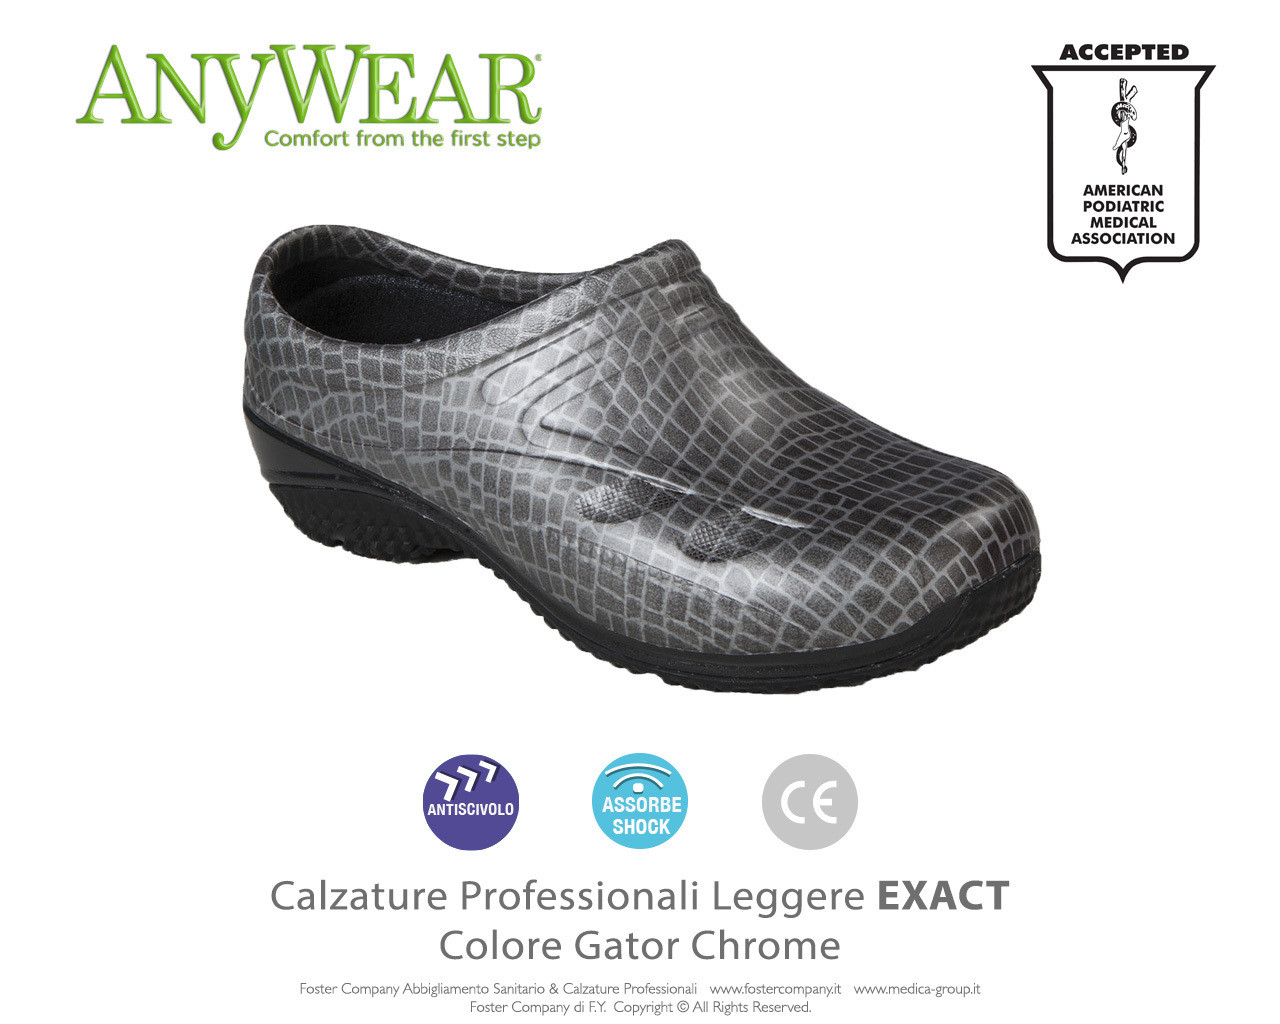 Calzature Professionali Anywear EXACT Colore Gator Chrome